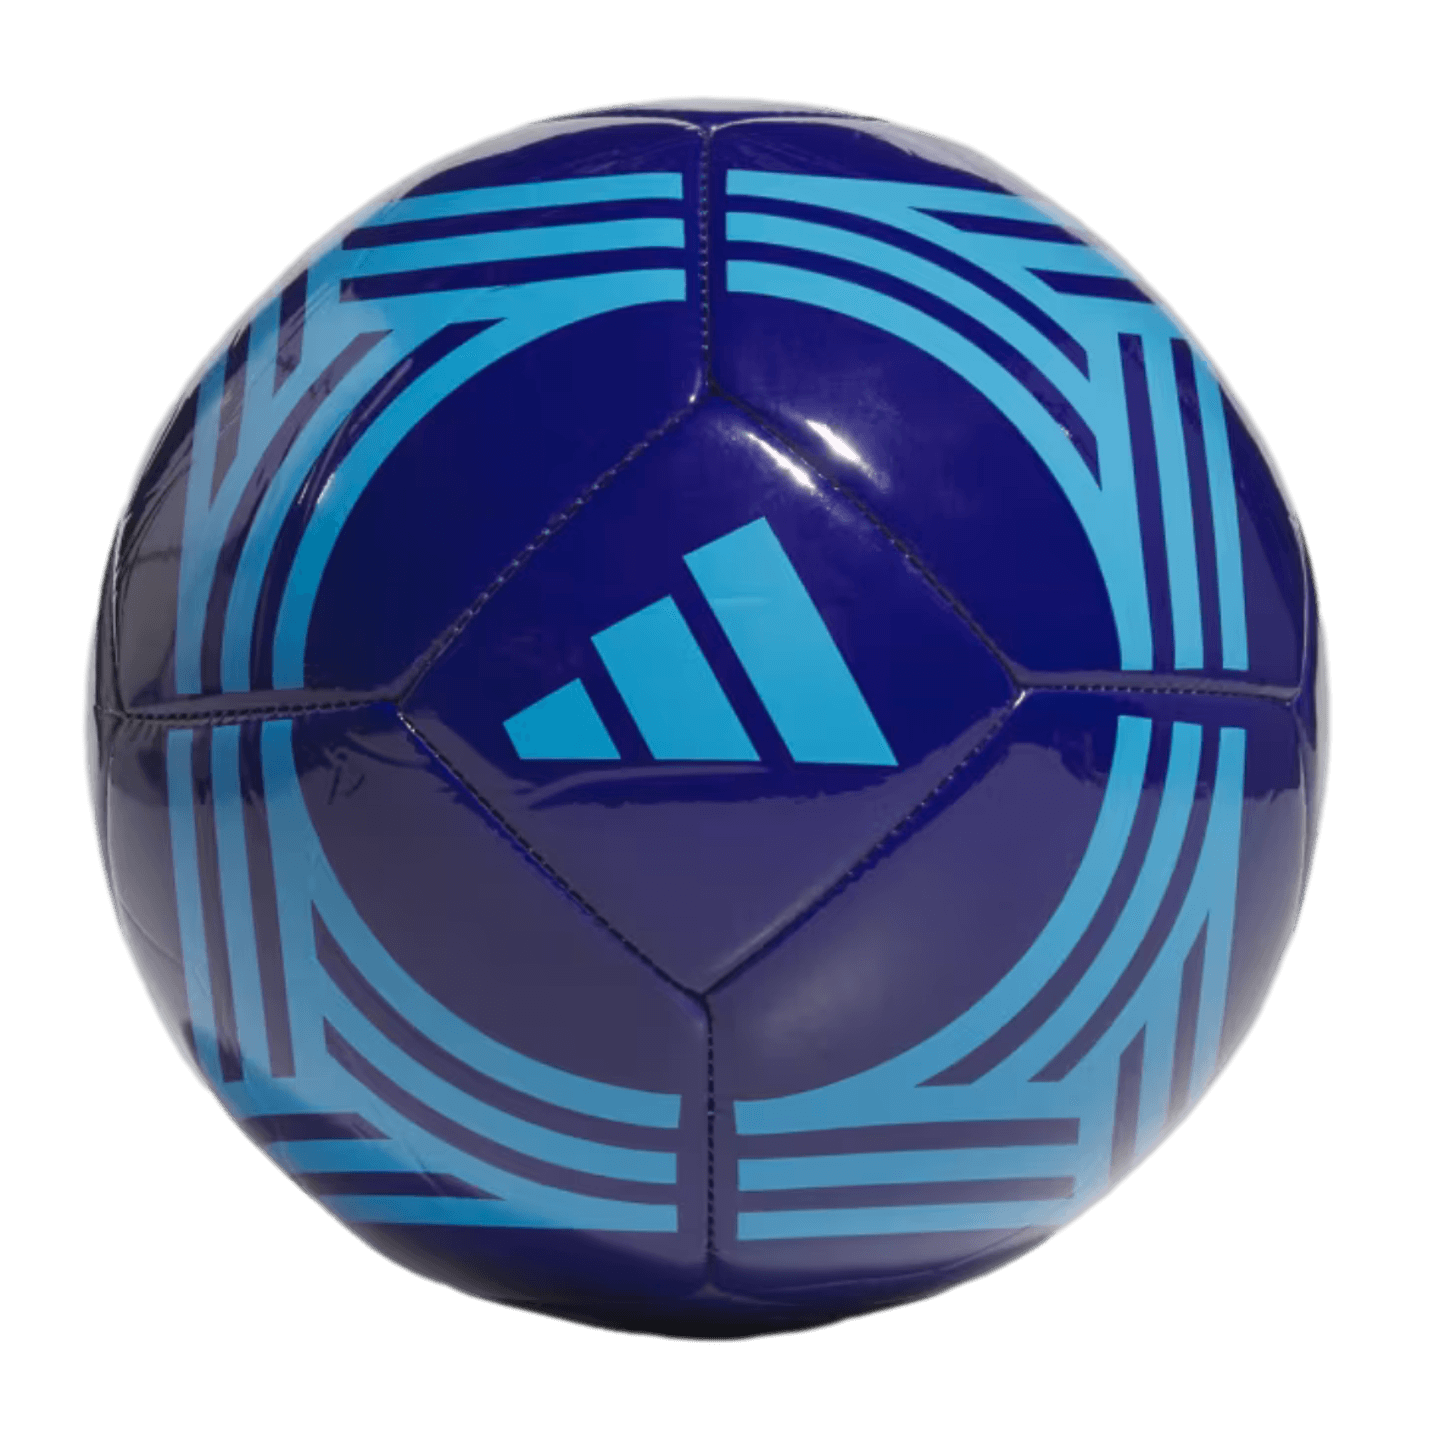 Balón Adidas Argentina Club